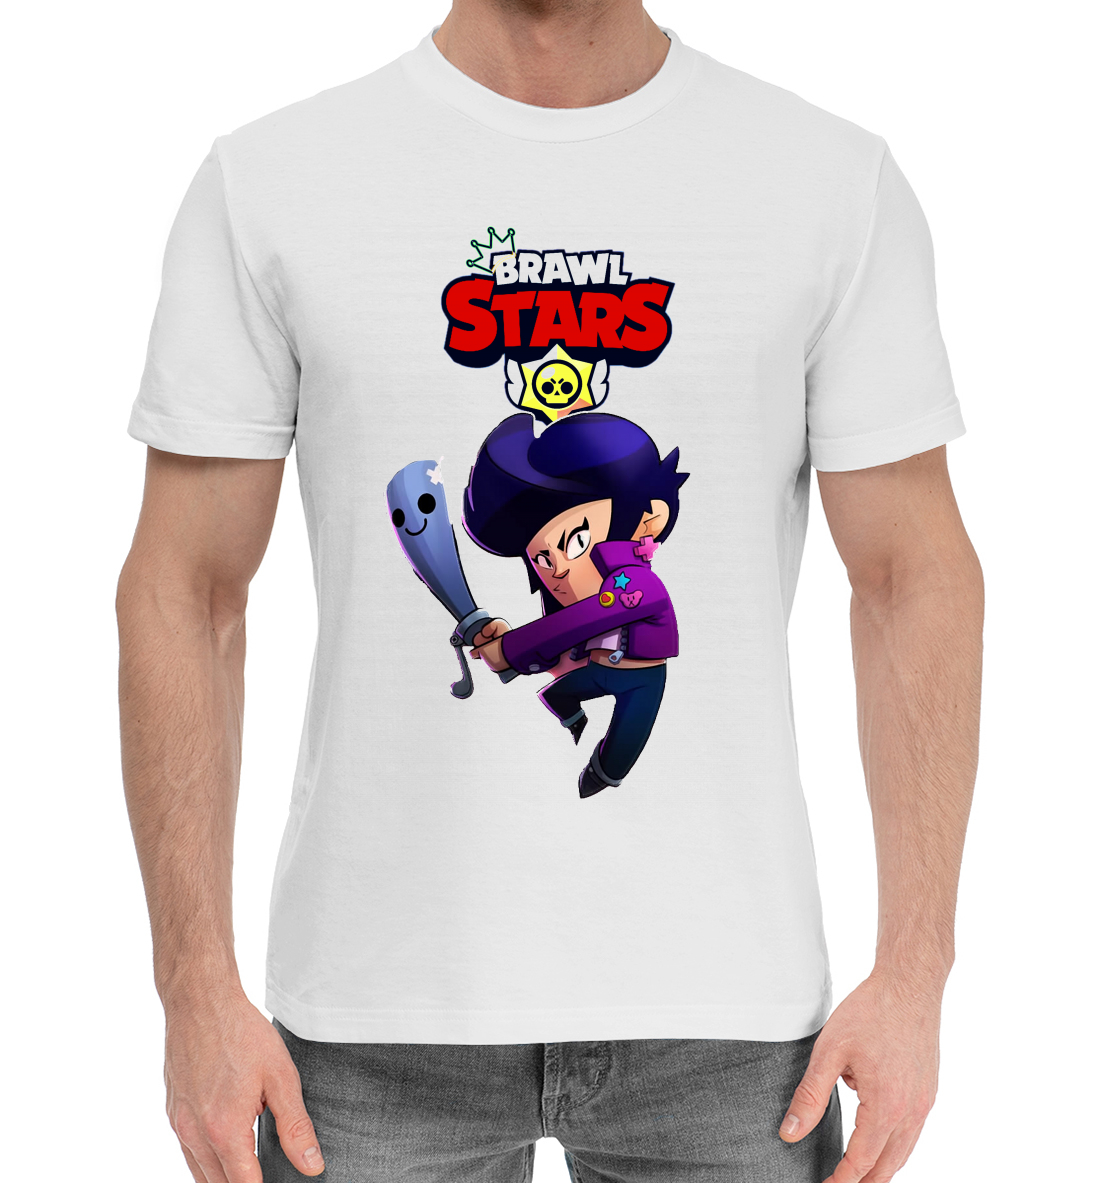 Мужская Хлопковая футболка с принтом Brawl Stars, артикул CLH-326848-hfu-2mp